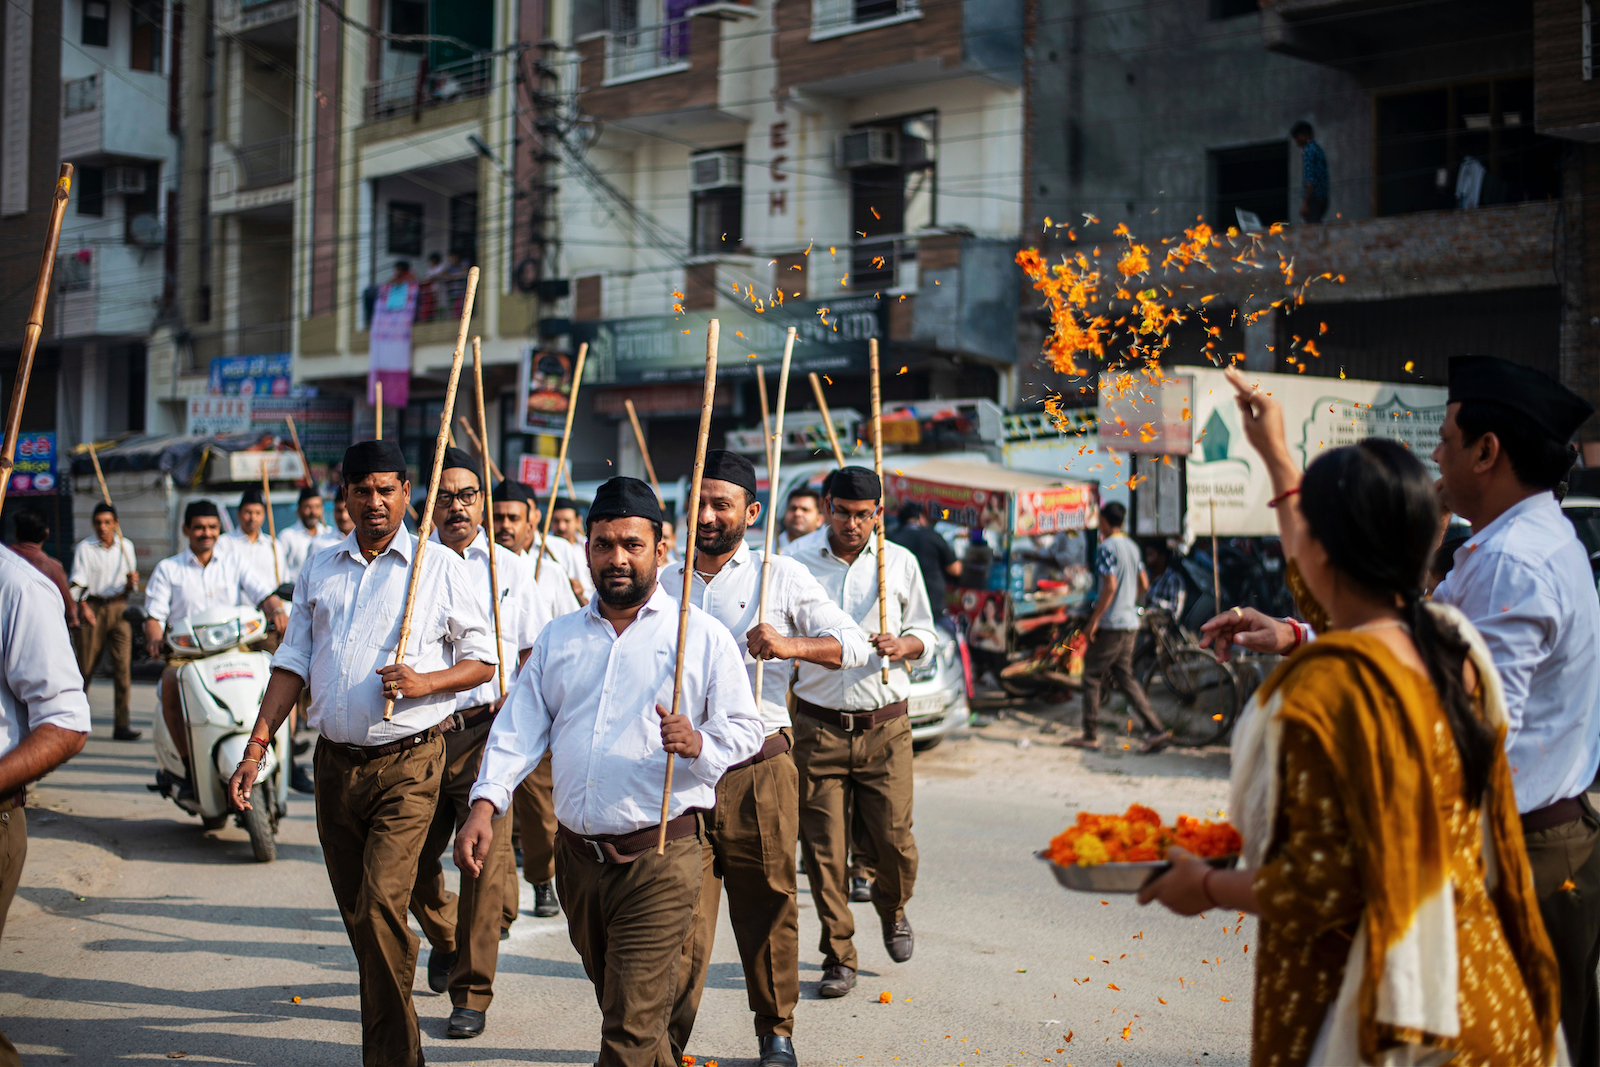 Members of the Rashtriya Swayamsevak Sangh (RSS) during march in Ghaziabad, Uttar Pradesh